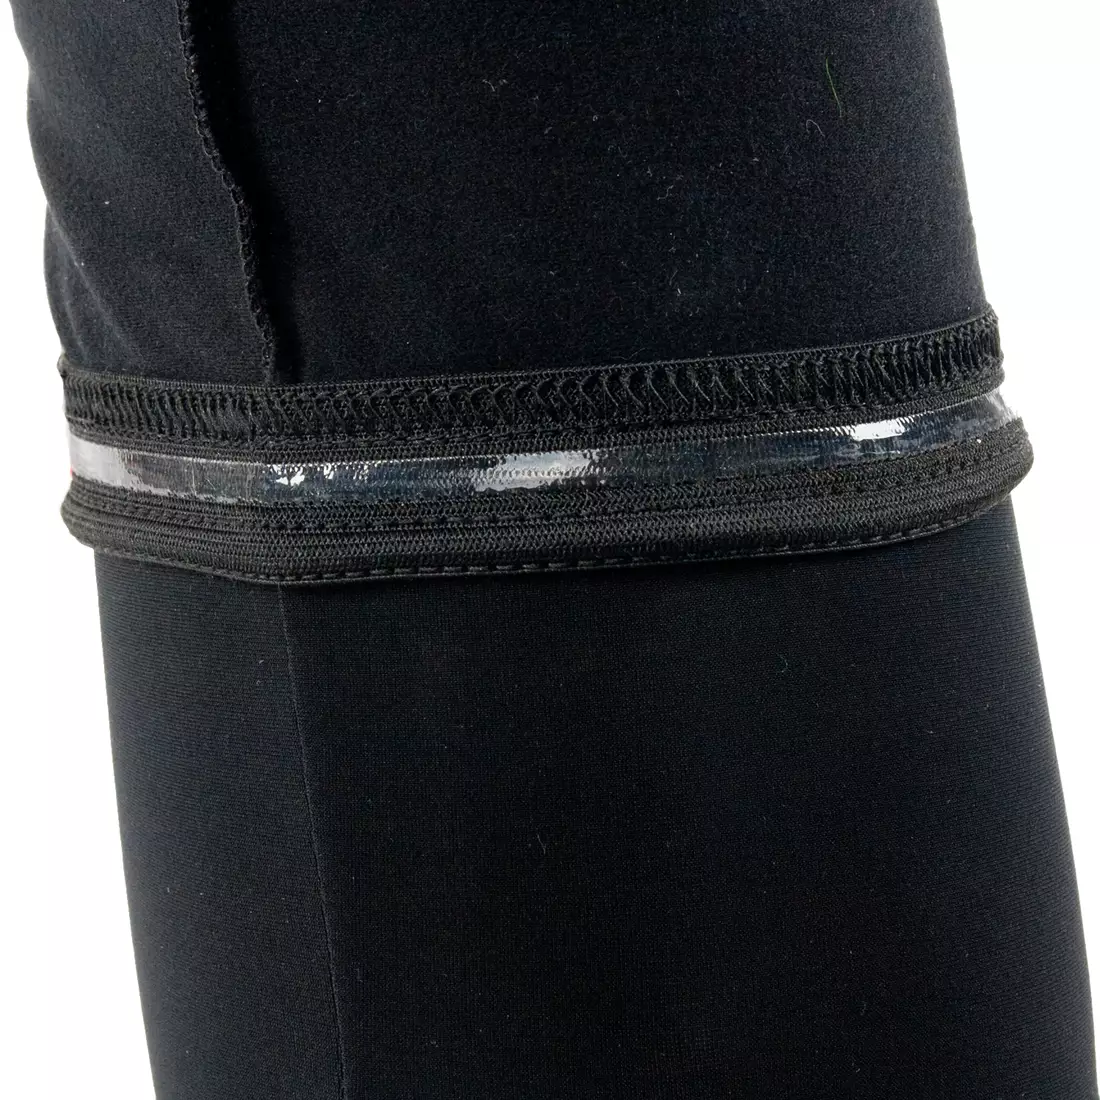 [Set] KAYMAQ DESIGN men's insulated cycling shorts with braces KYBT34, black + DEKO insulated knee pads D-ROBAX, black